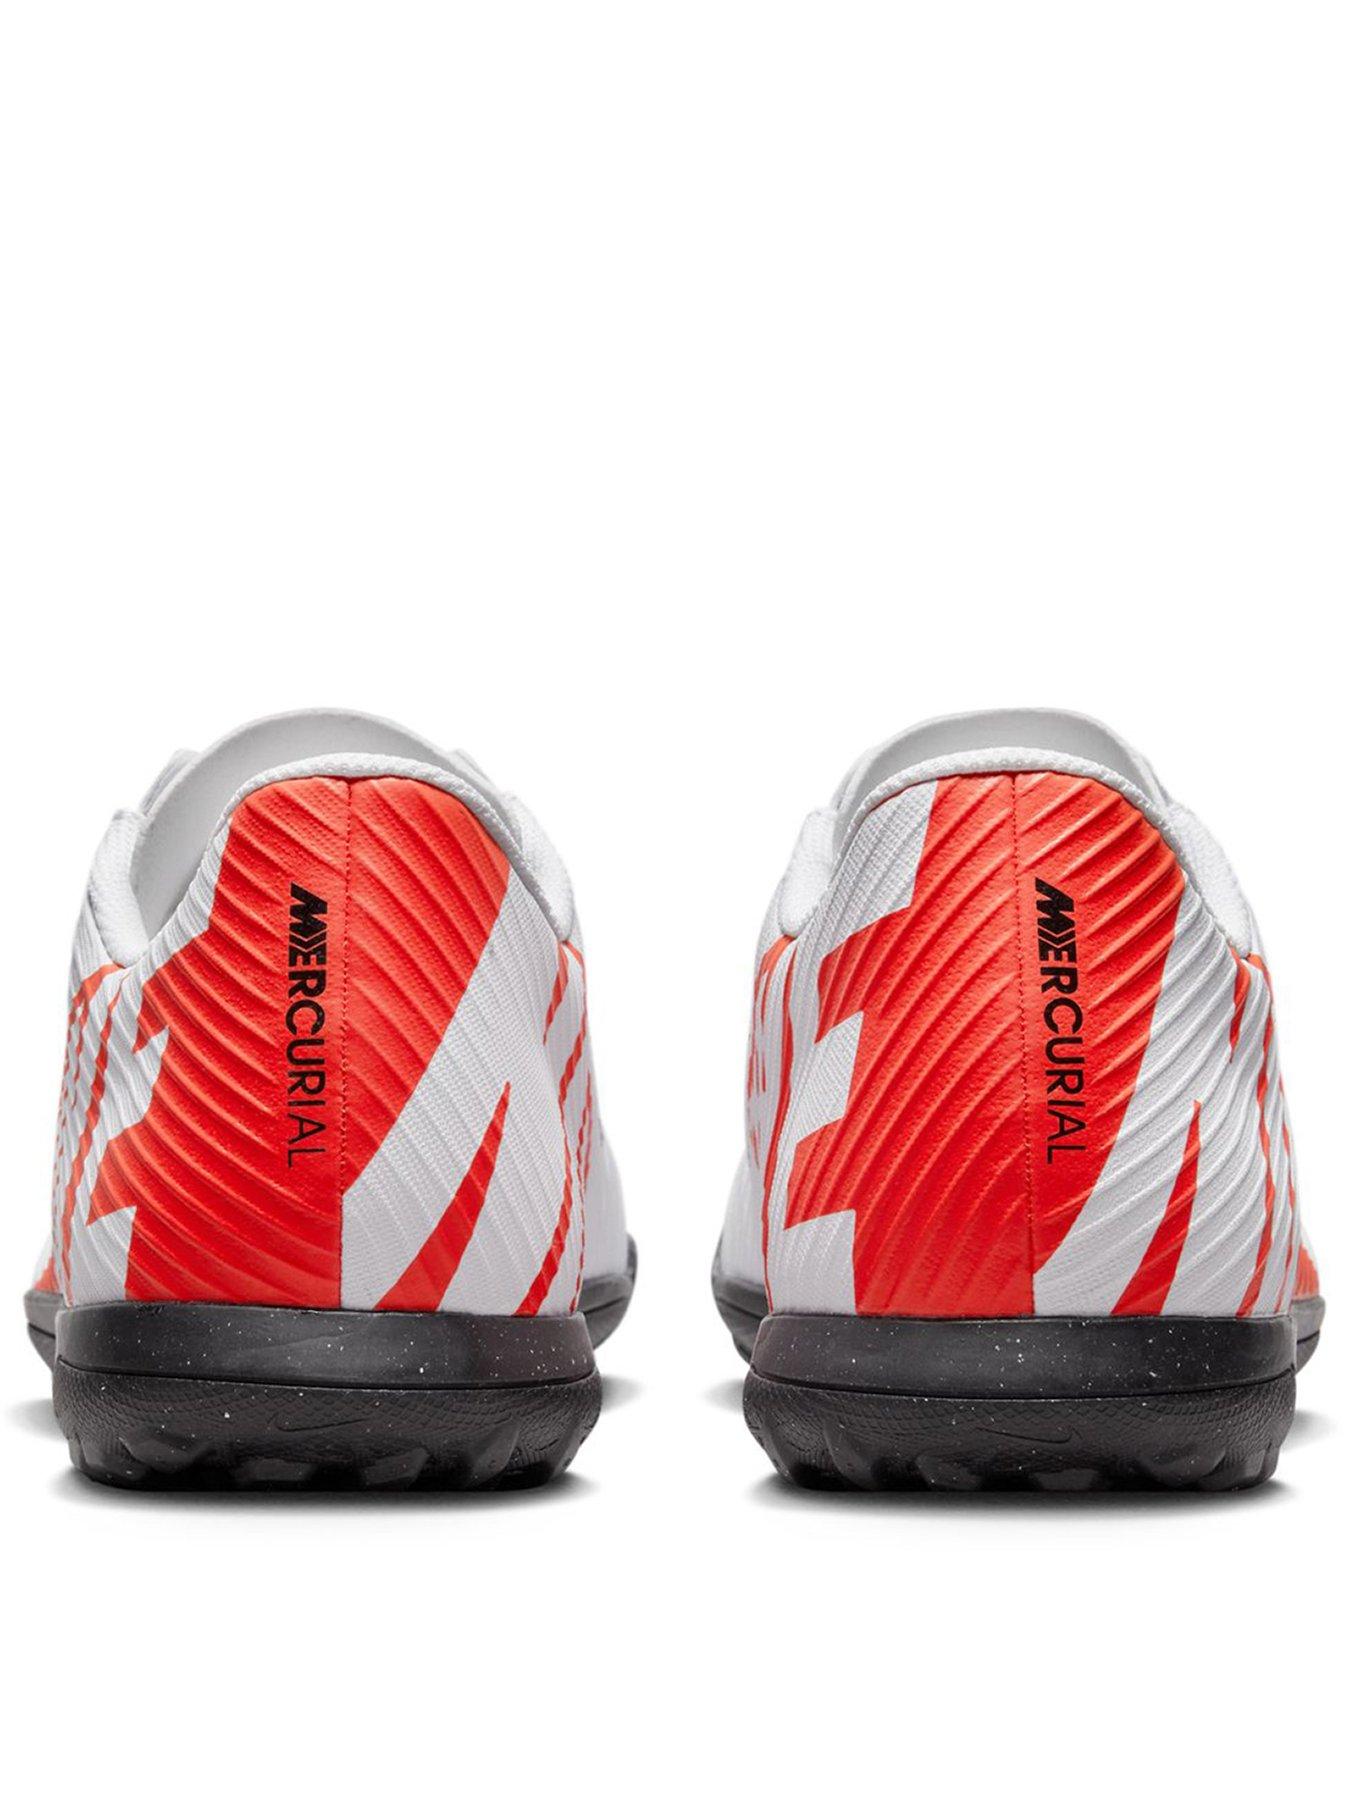 Nike Mercurial Astro Turf football boots silver & orange, size